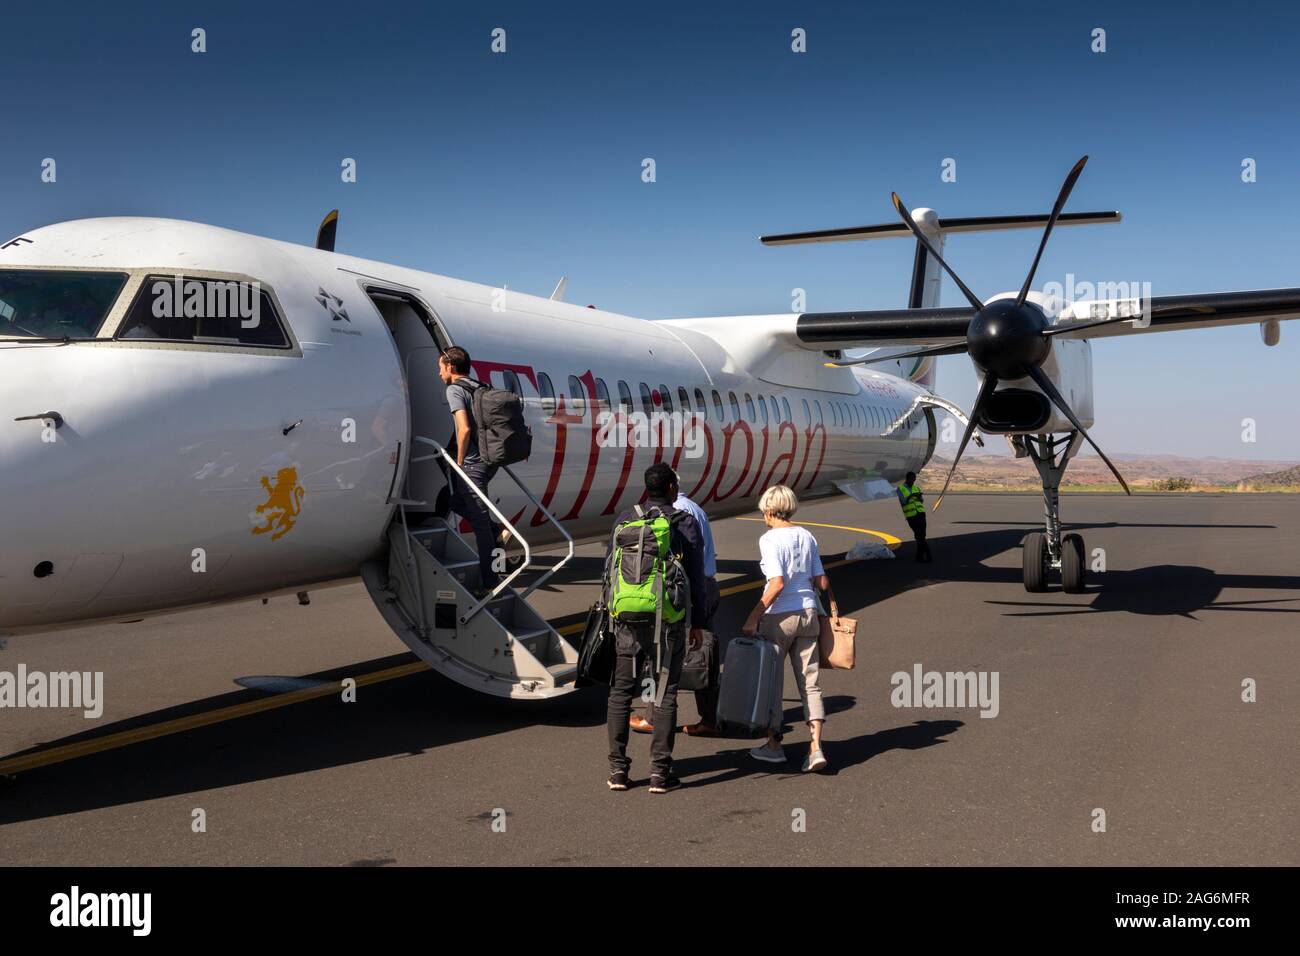 Ethiopia, Amhara, Lalibela, Airport, passengers boarding Ethiopian Airlines Bombardier Q400, Dash 8 aircraft Stock Photo